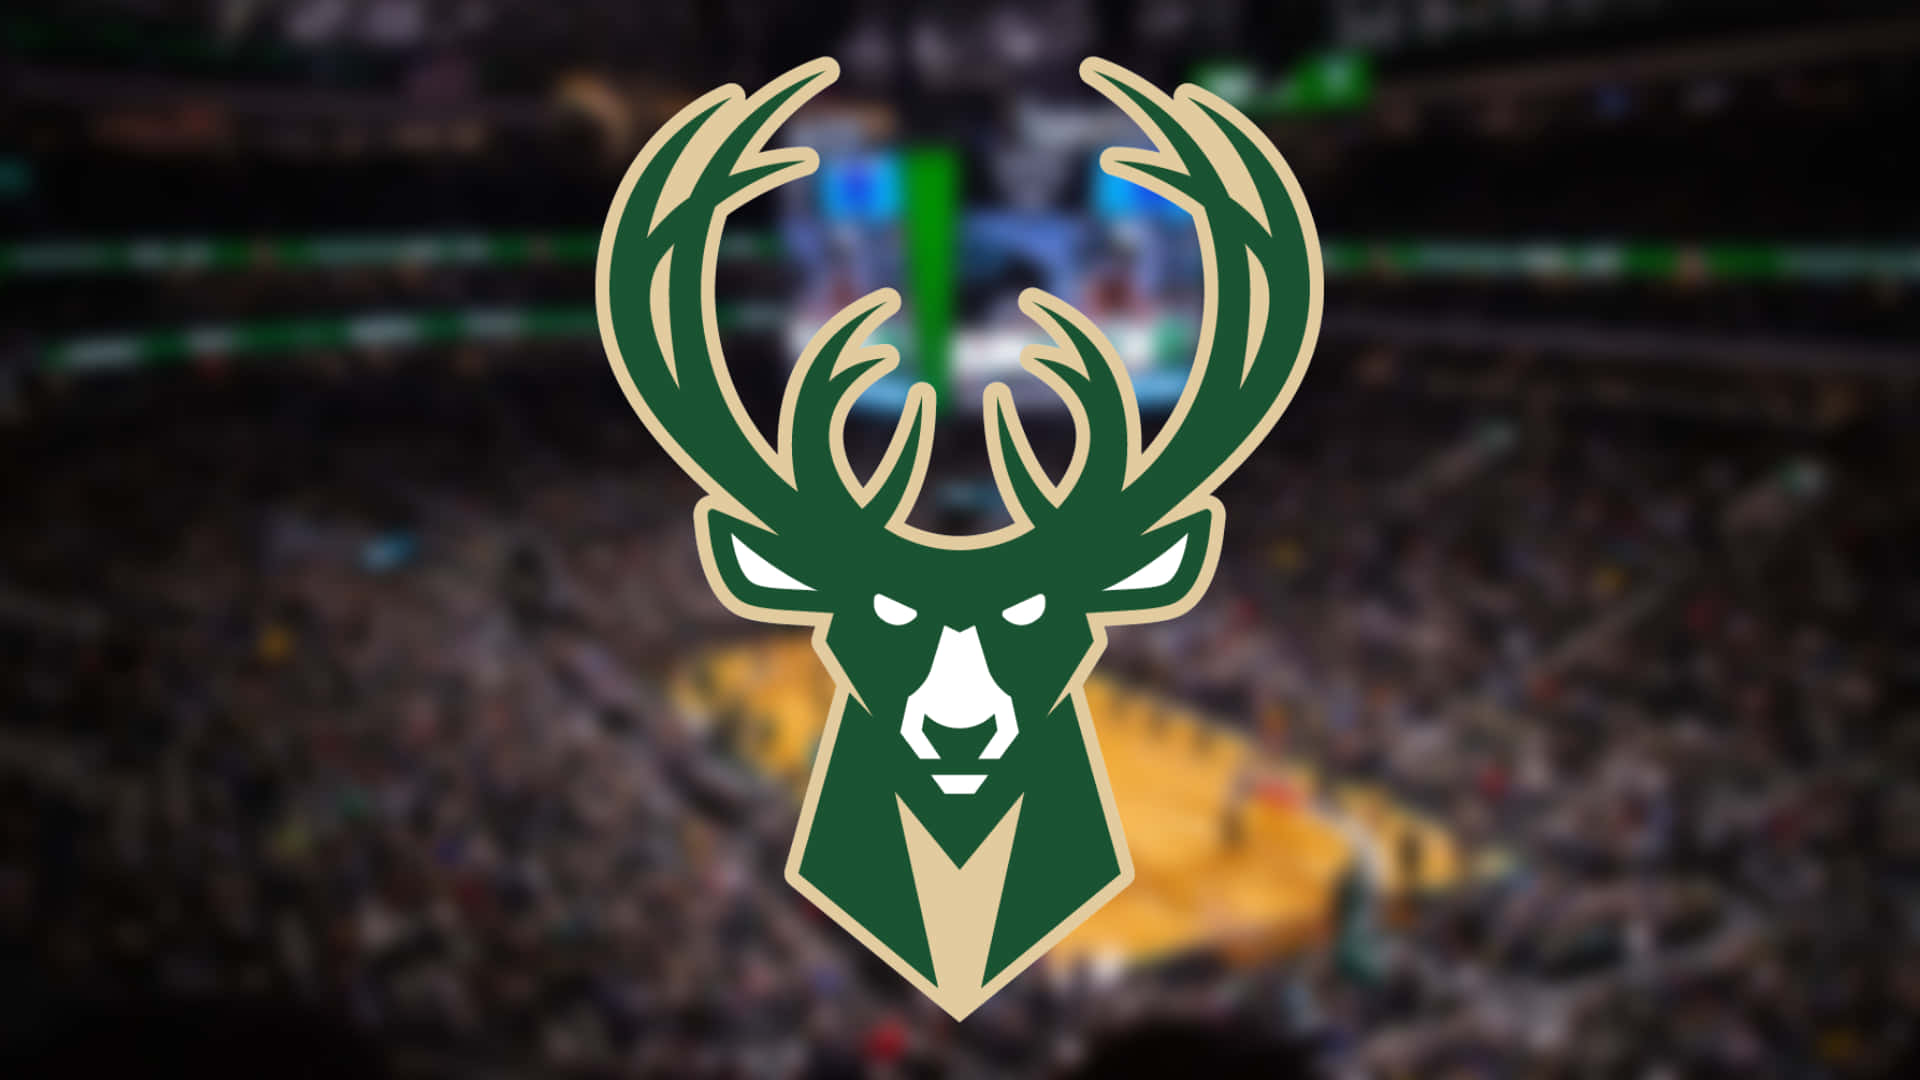 Milwaukee Bucks Logo Wallpaper